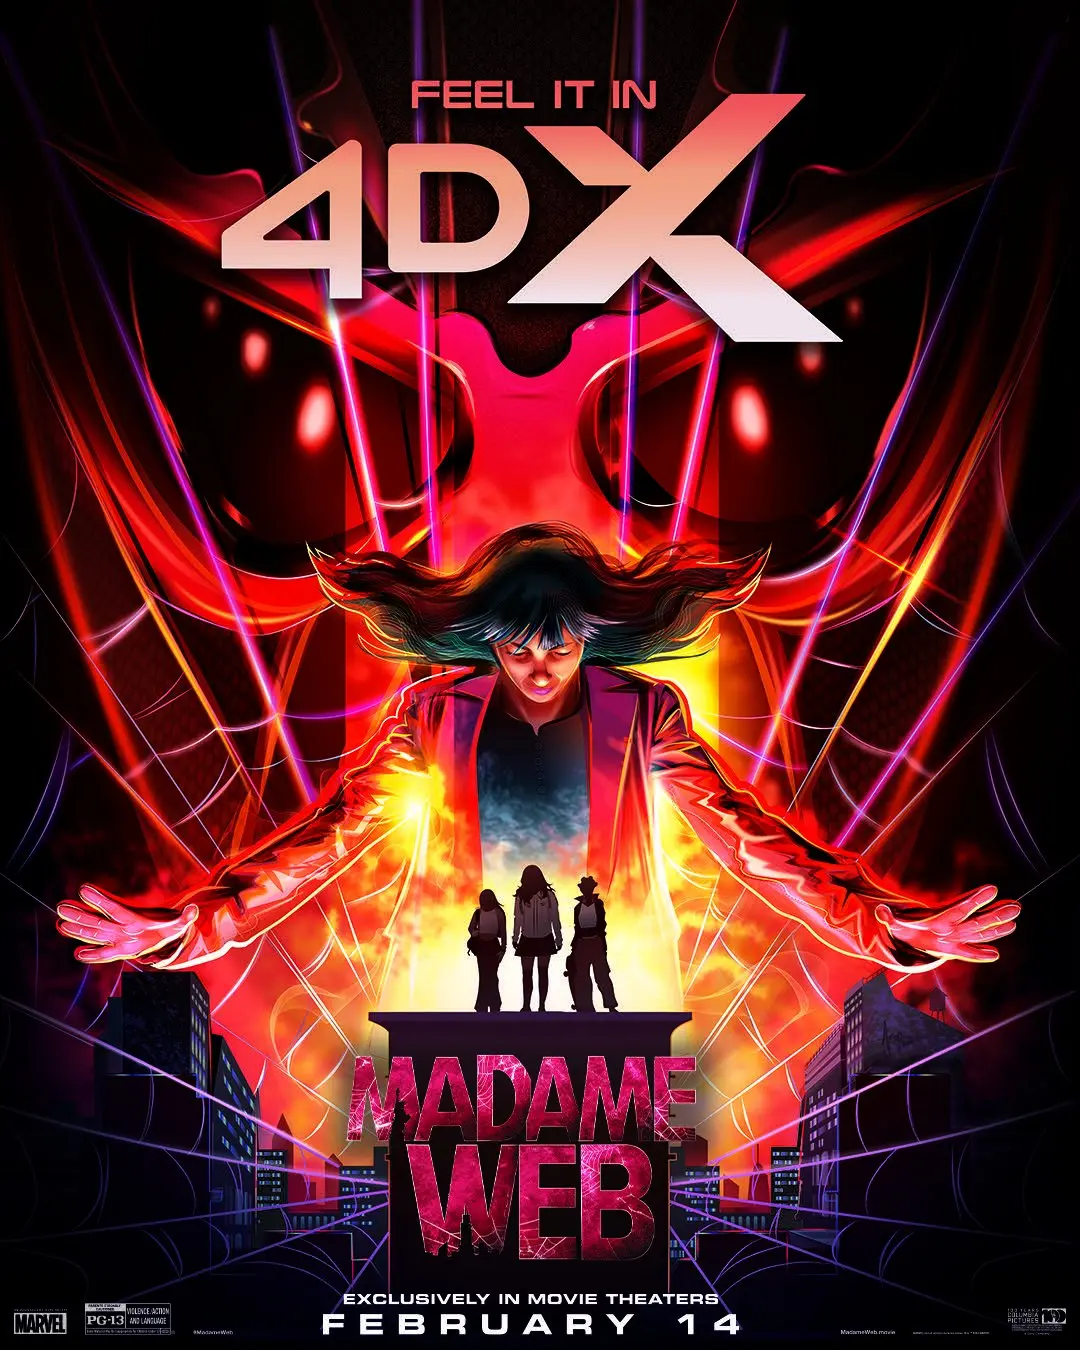 Madame-Teia-poster-4DX-legadodamarvel.webp